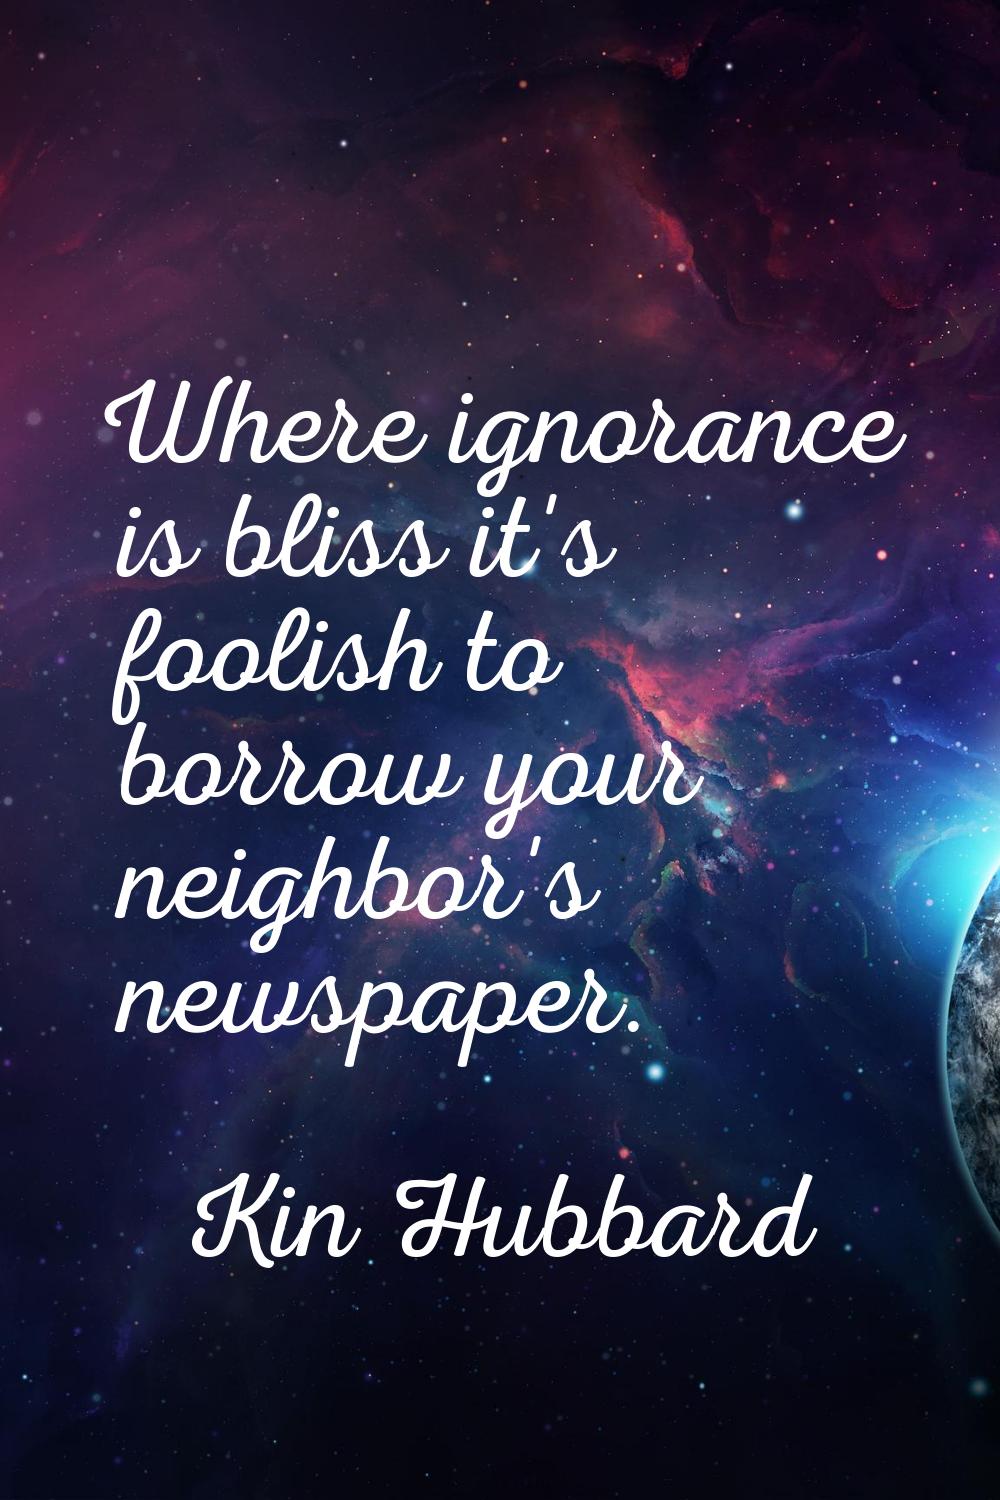 Where ignorance is bliss it's foolish to borrow your neighbor's newspaper.